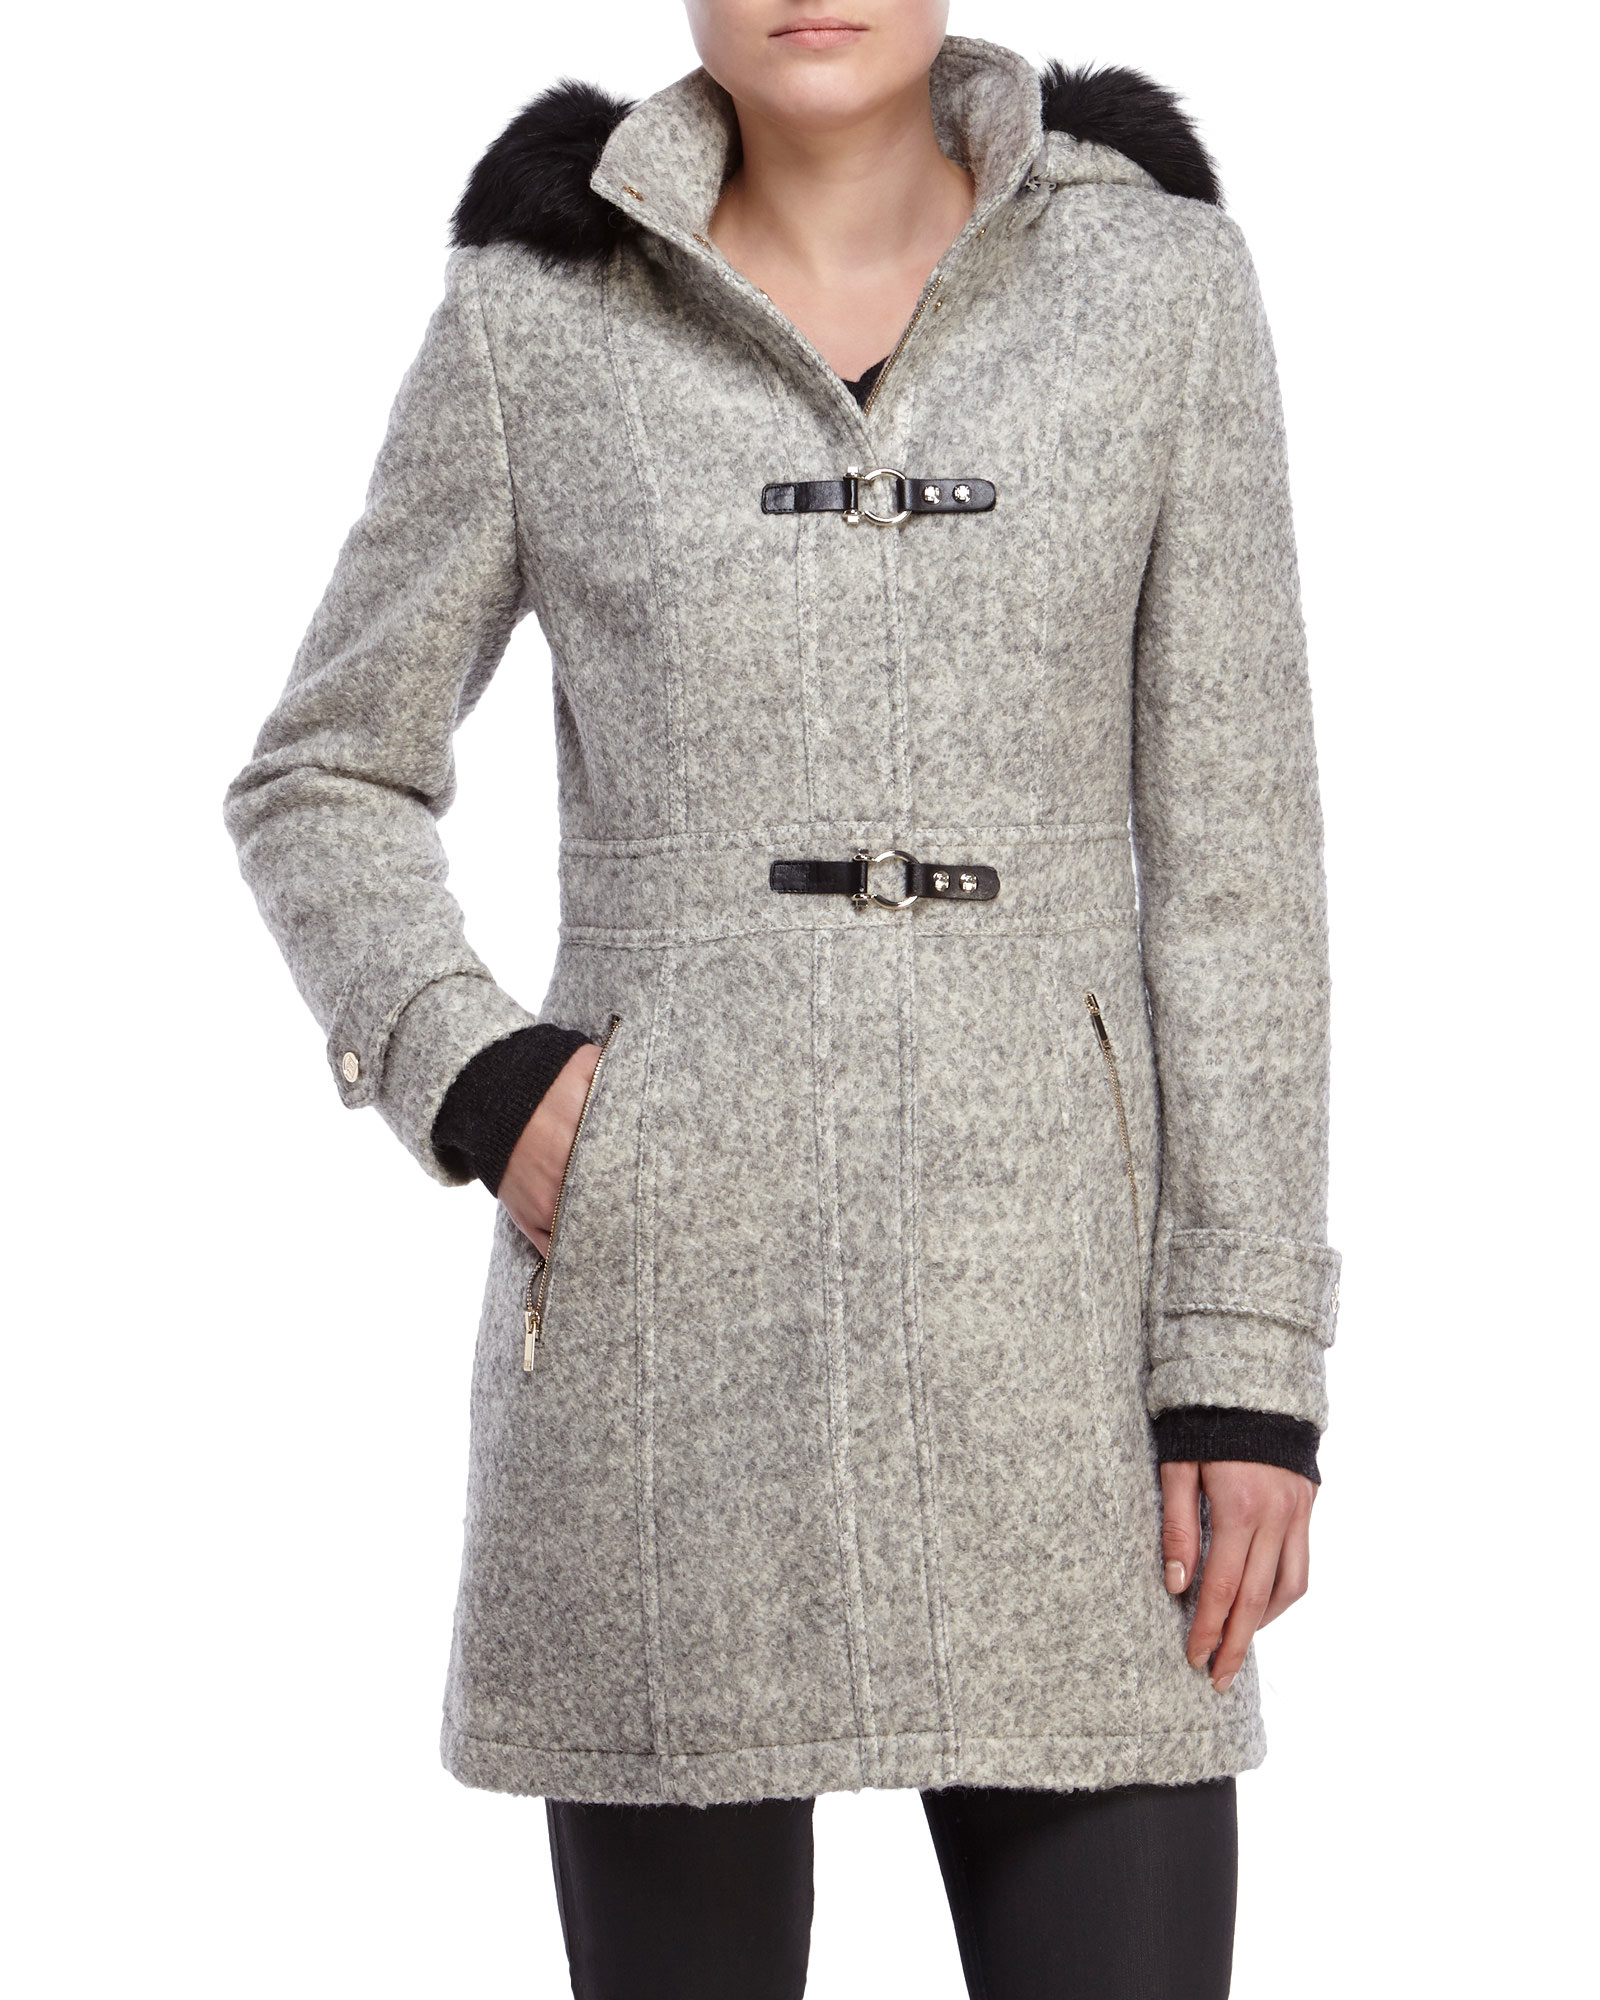 Lyst - Ivanka Trump Grey Faux Fur Trim Hooded Jacket in Gray